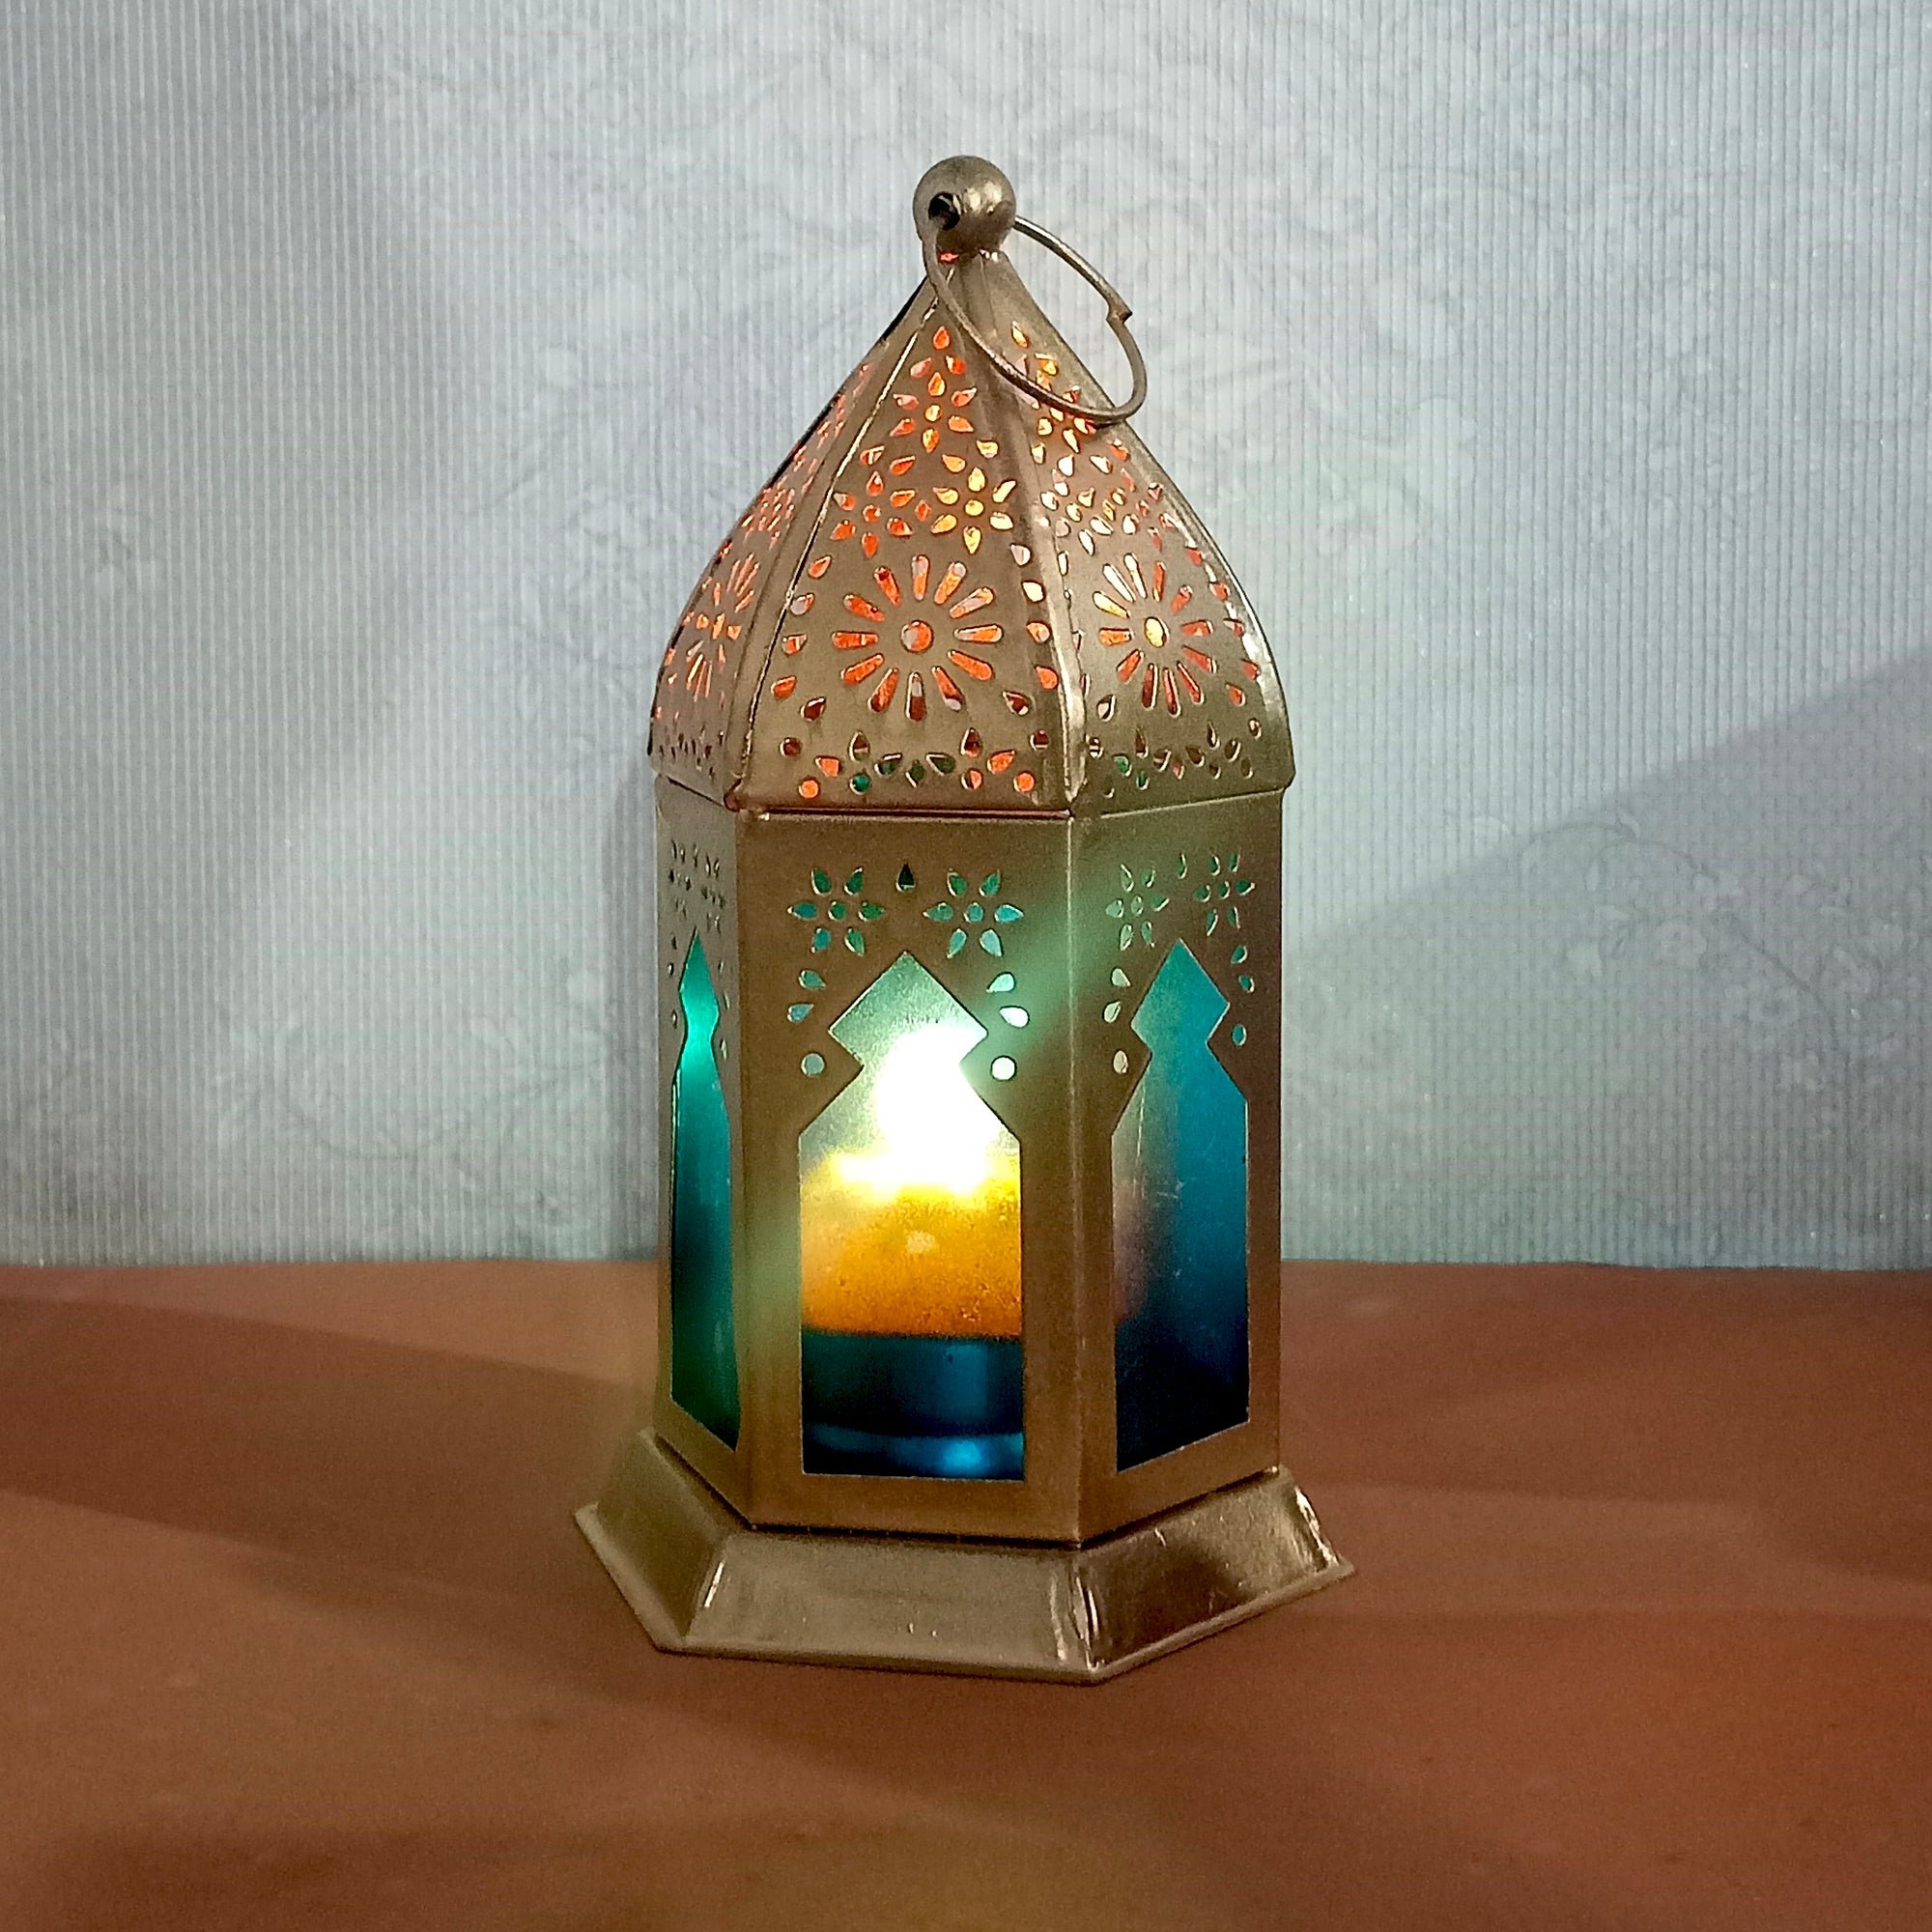 Marakan Lamp Tealight Candle Set of 3 Pcs - 6 Inch